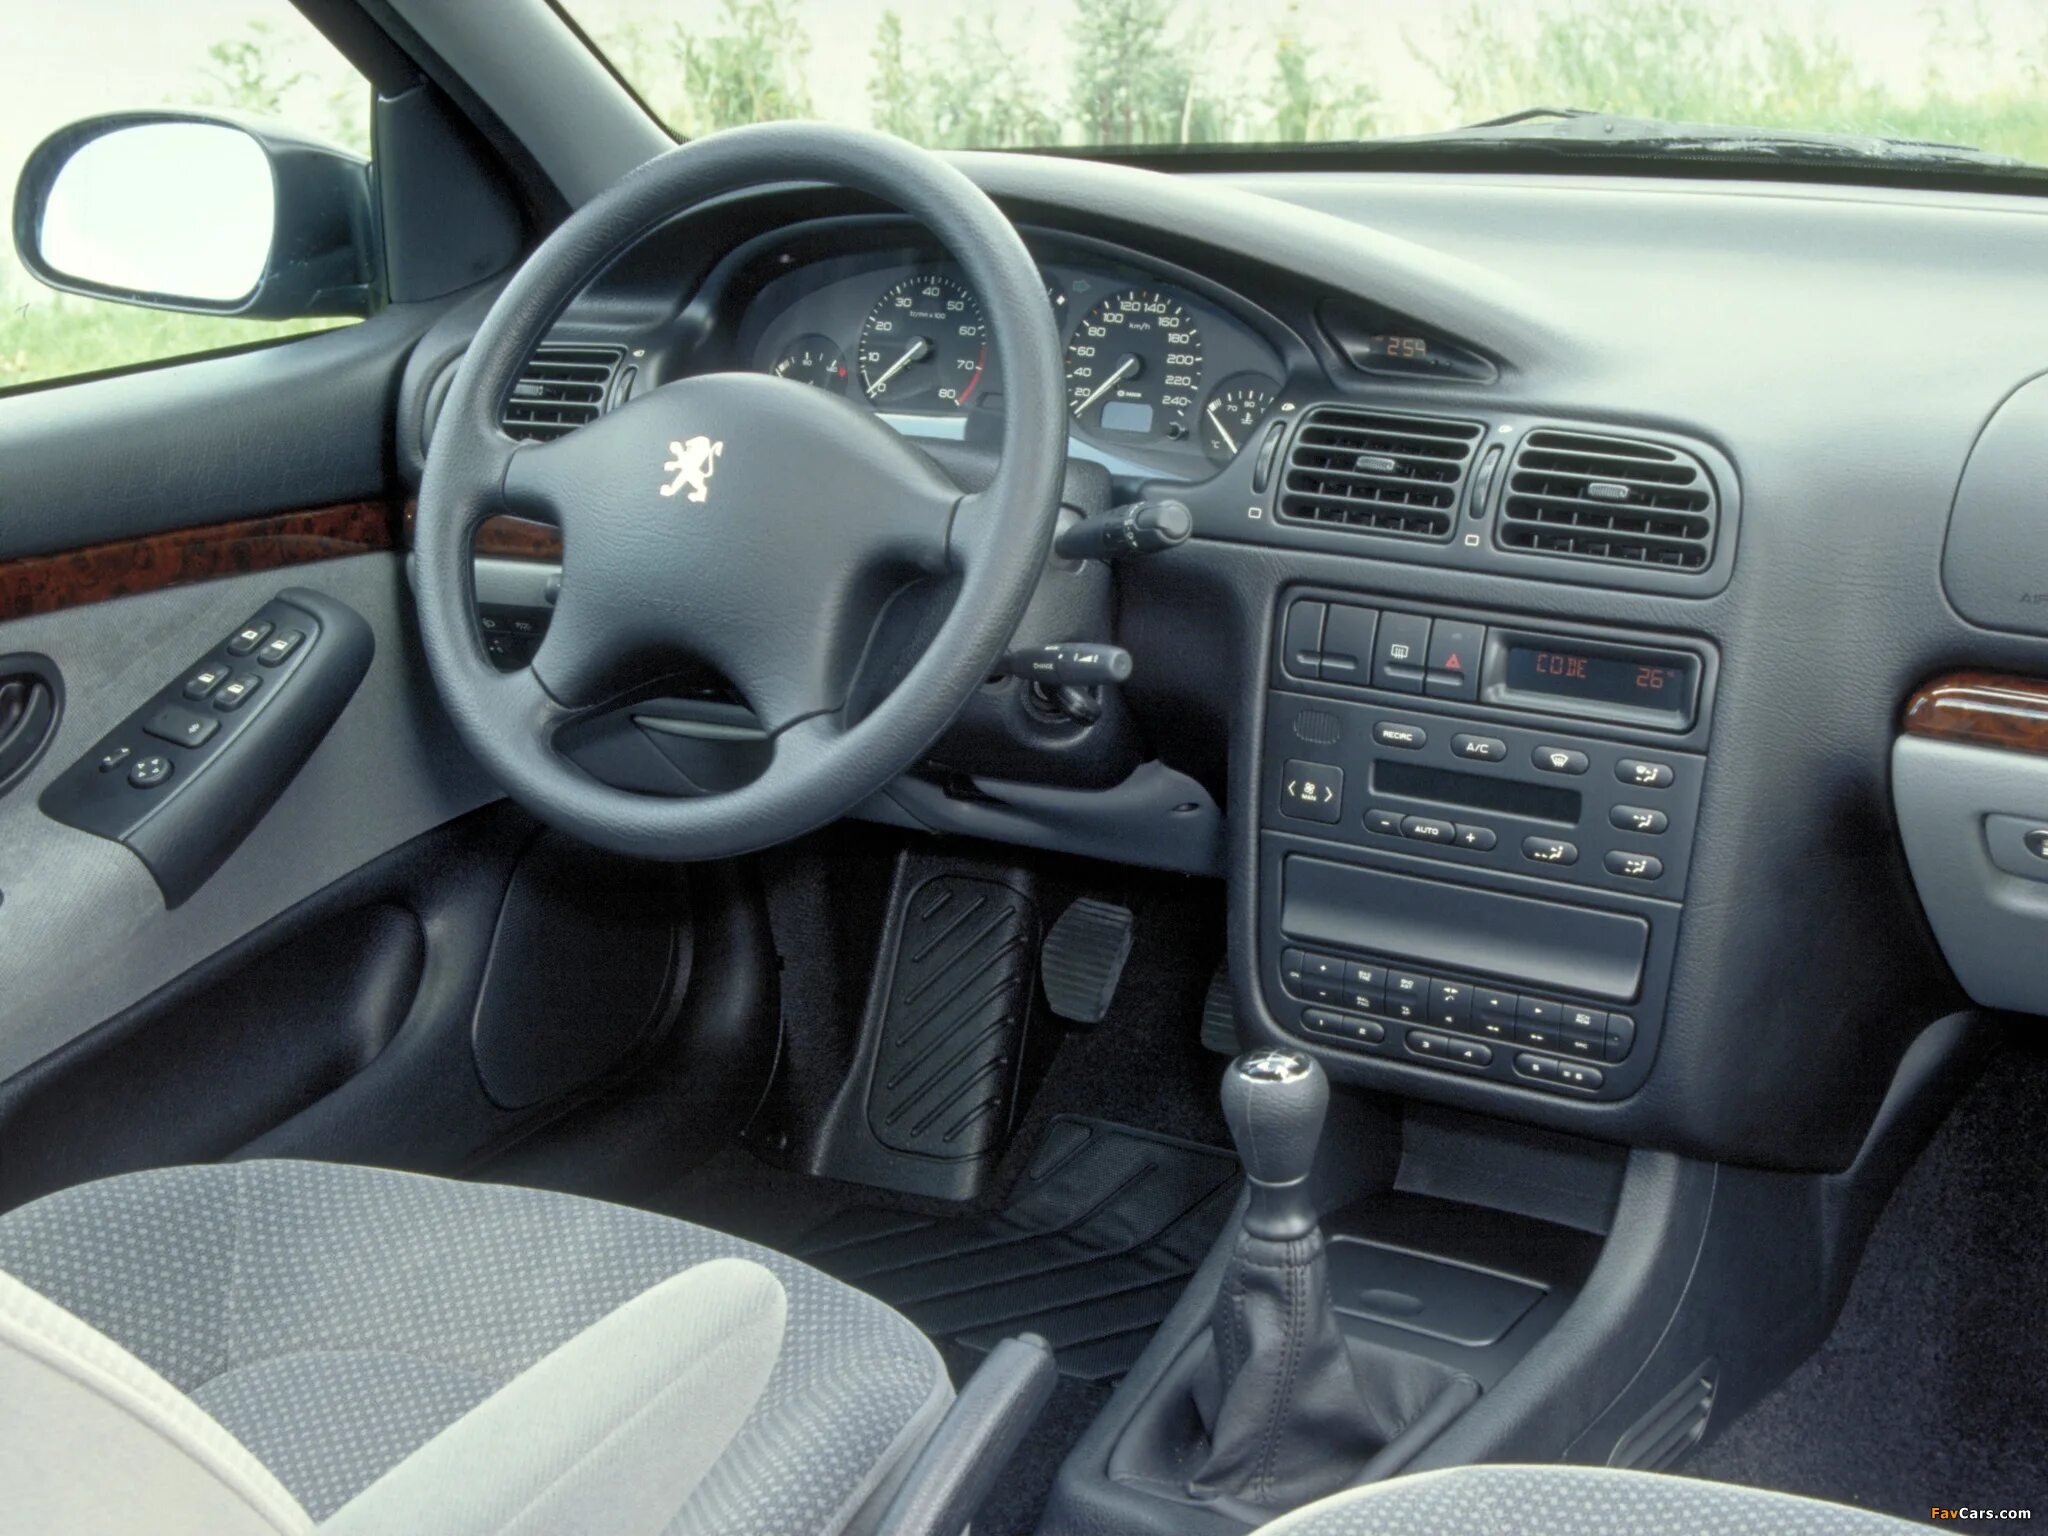 Пежо 406 2000 года. Peugeot 406 седан 1999-2004. Peugeot 406 салон. Пежо 406 седан. Пежо седан 406 2004.